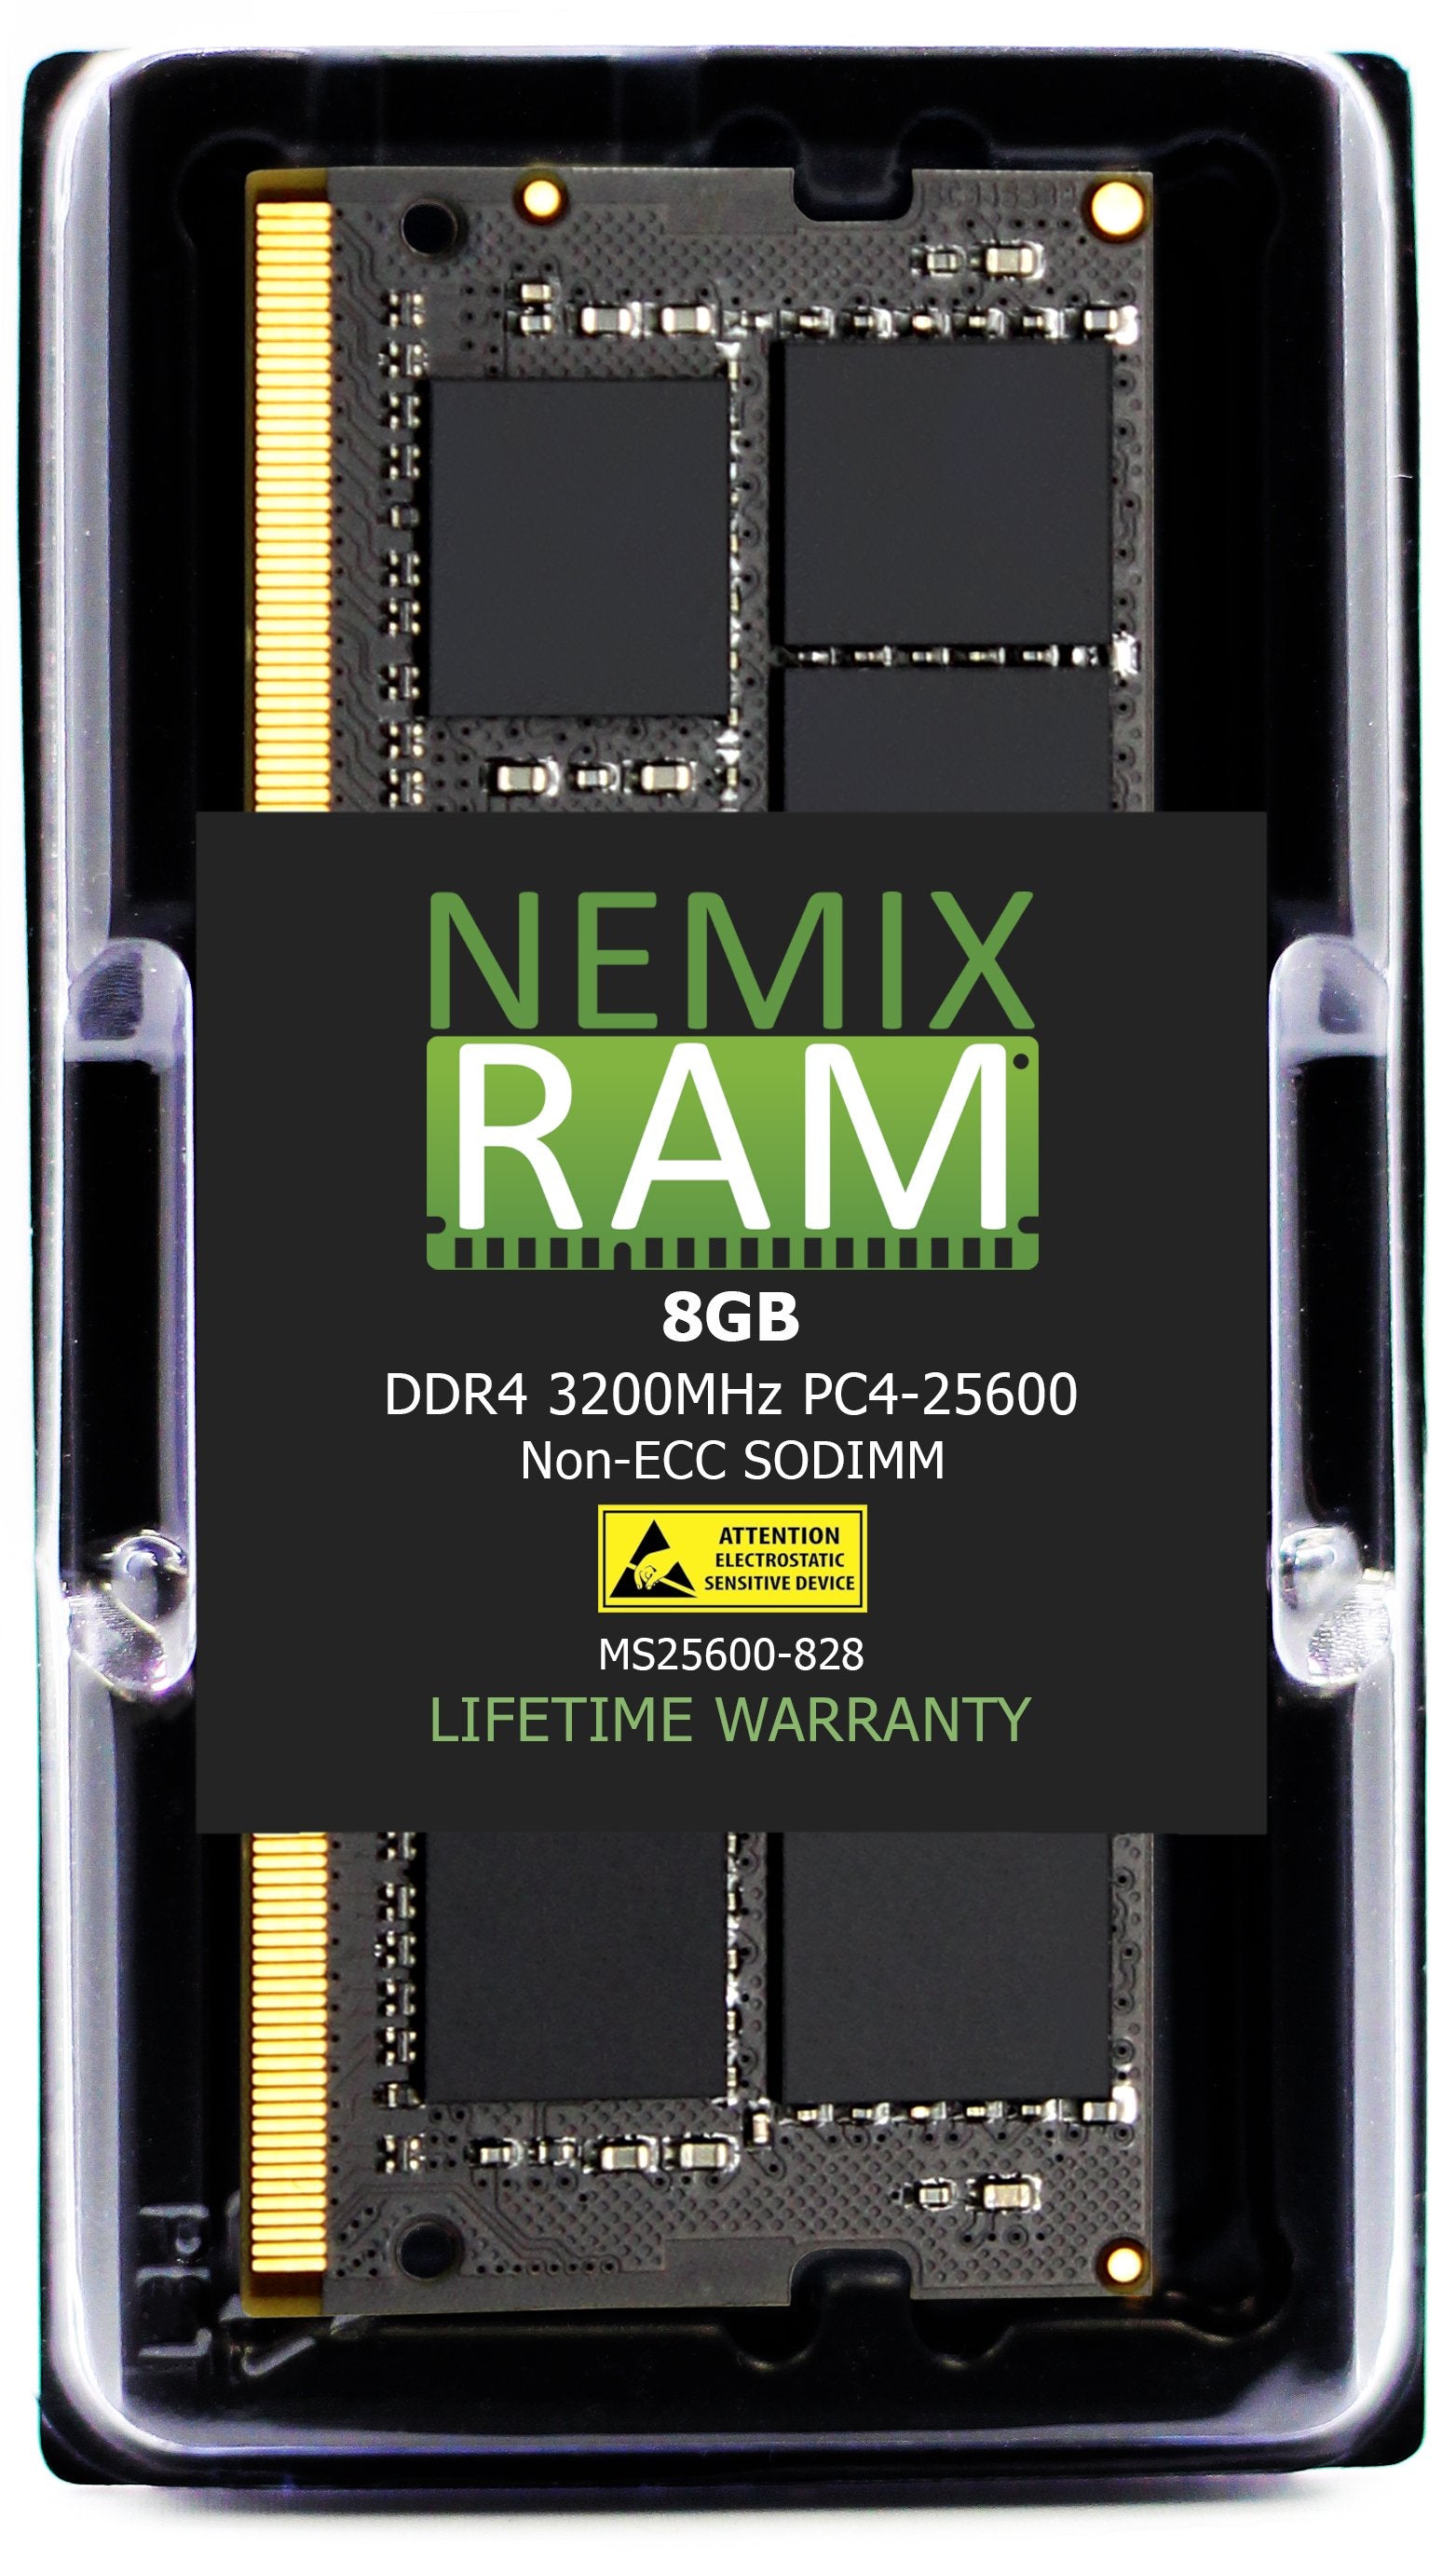 NEMIX RAM Fast ASUSTOR AS-8GD4 92M11-S8D40 Compatible Memory Upgrade